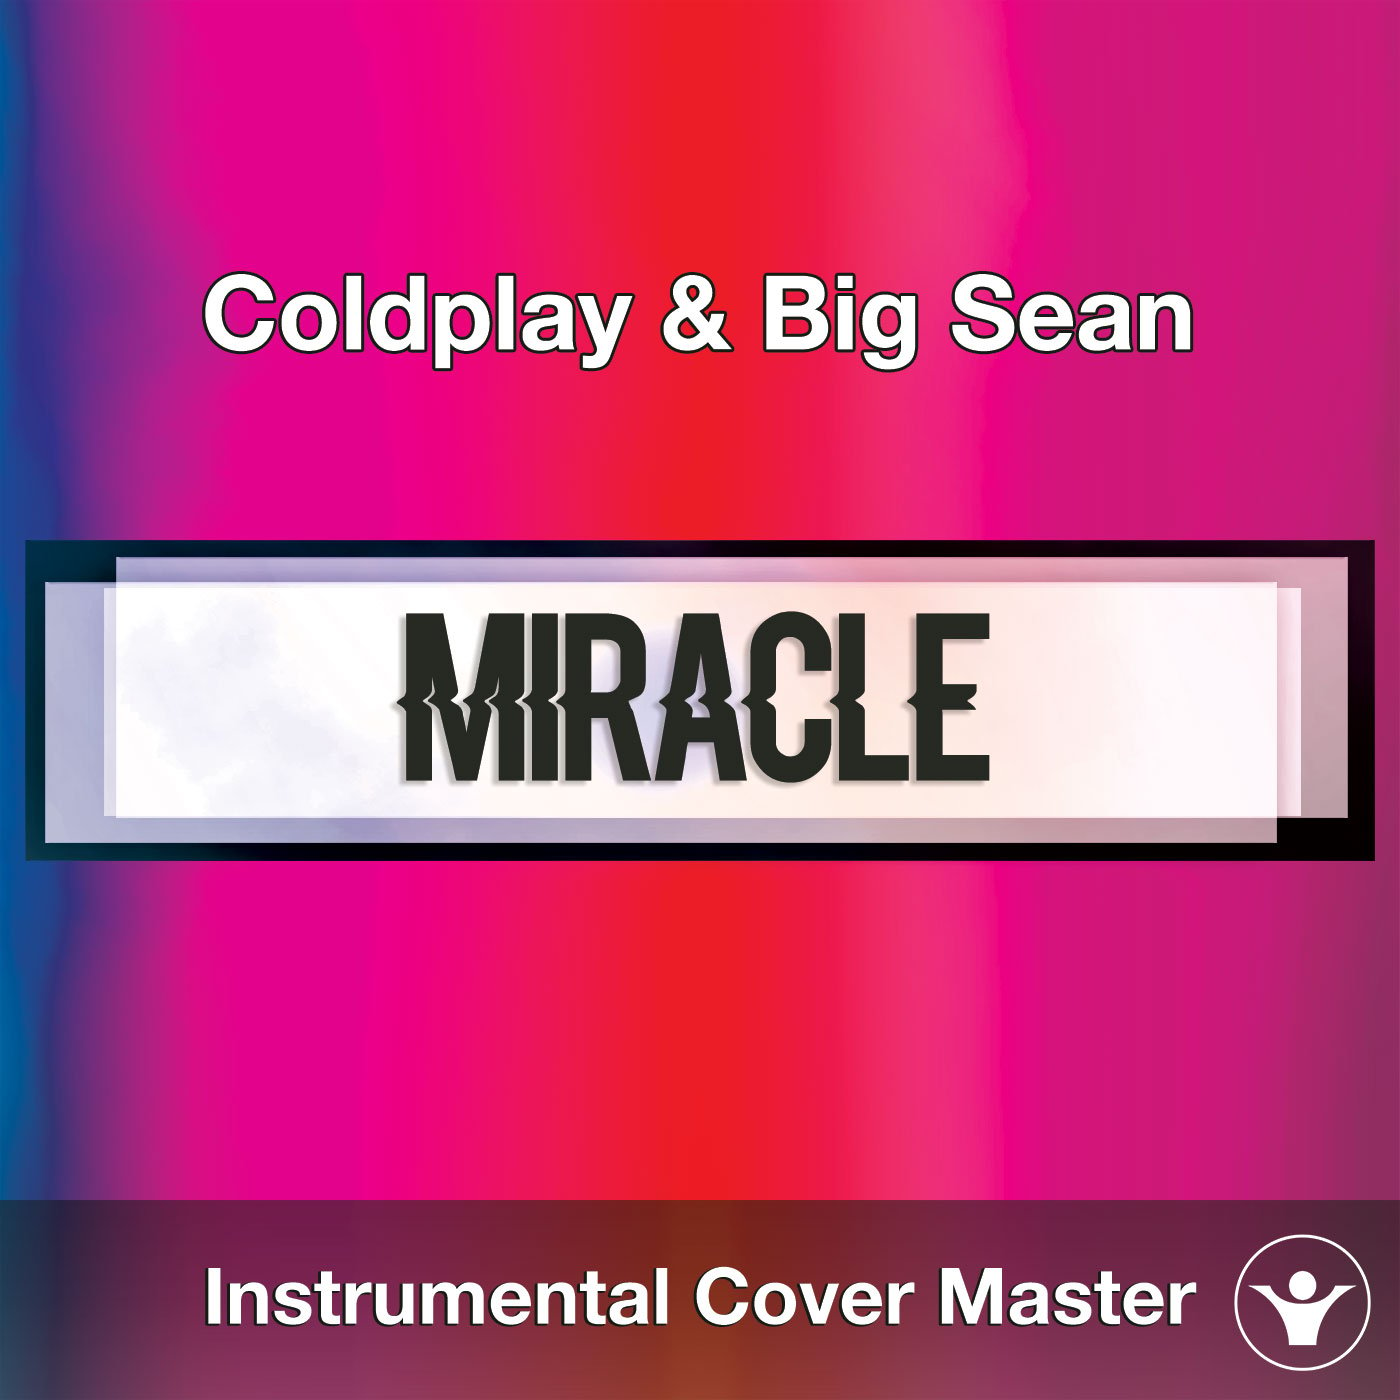 vena llegar Instrumento Coldplay & Big Sean - Miracles (Someone Special(Instrumental Cover)